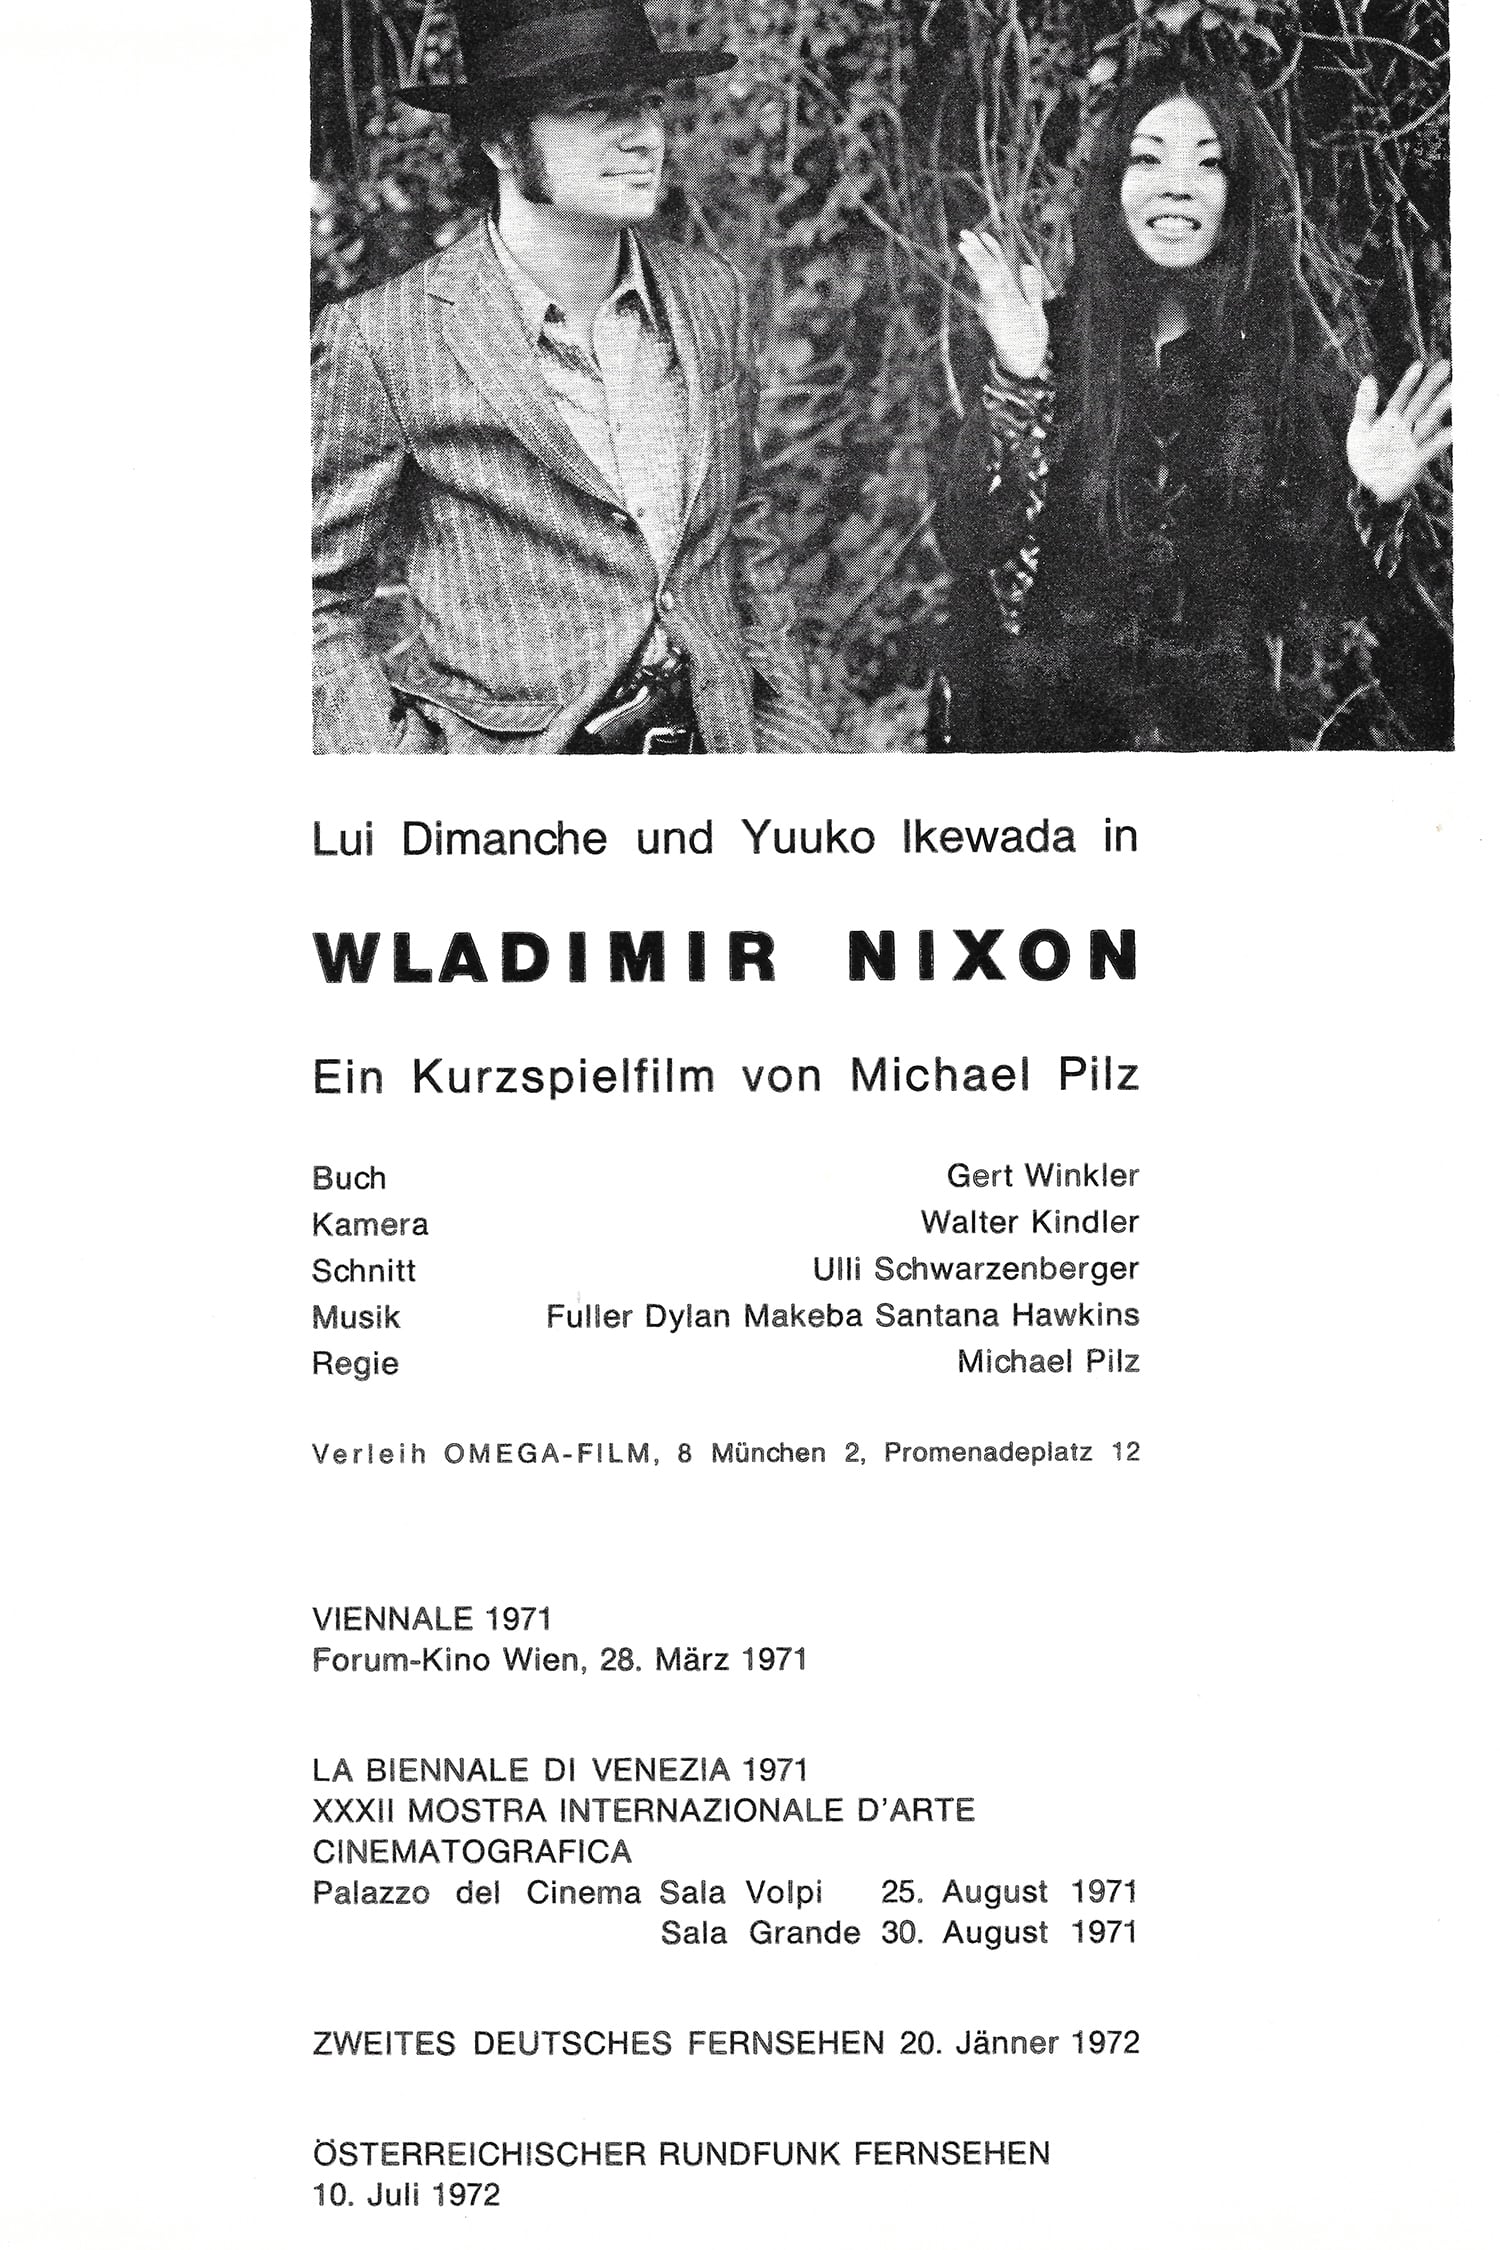 Wladimir Nixon